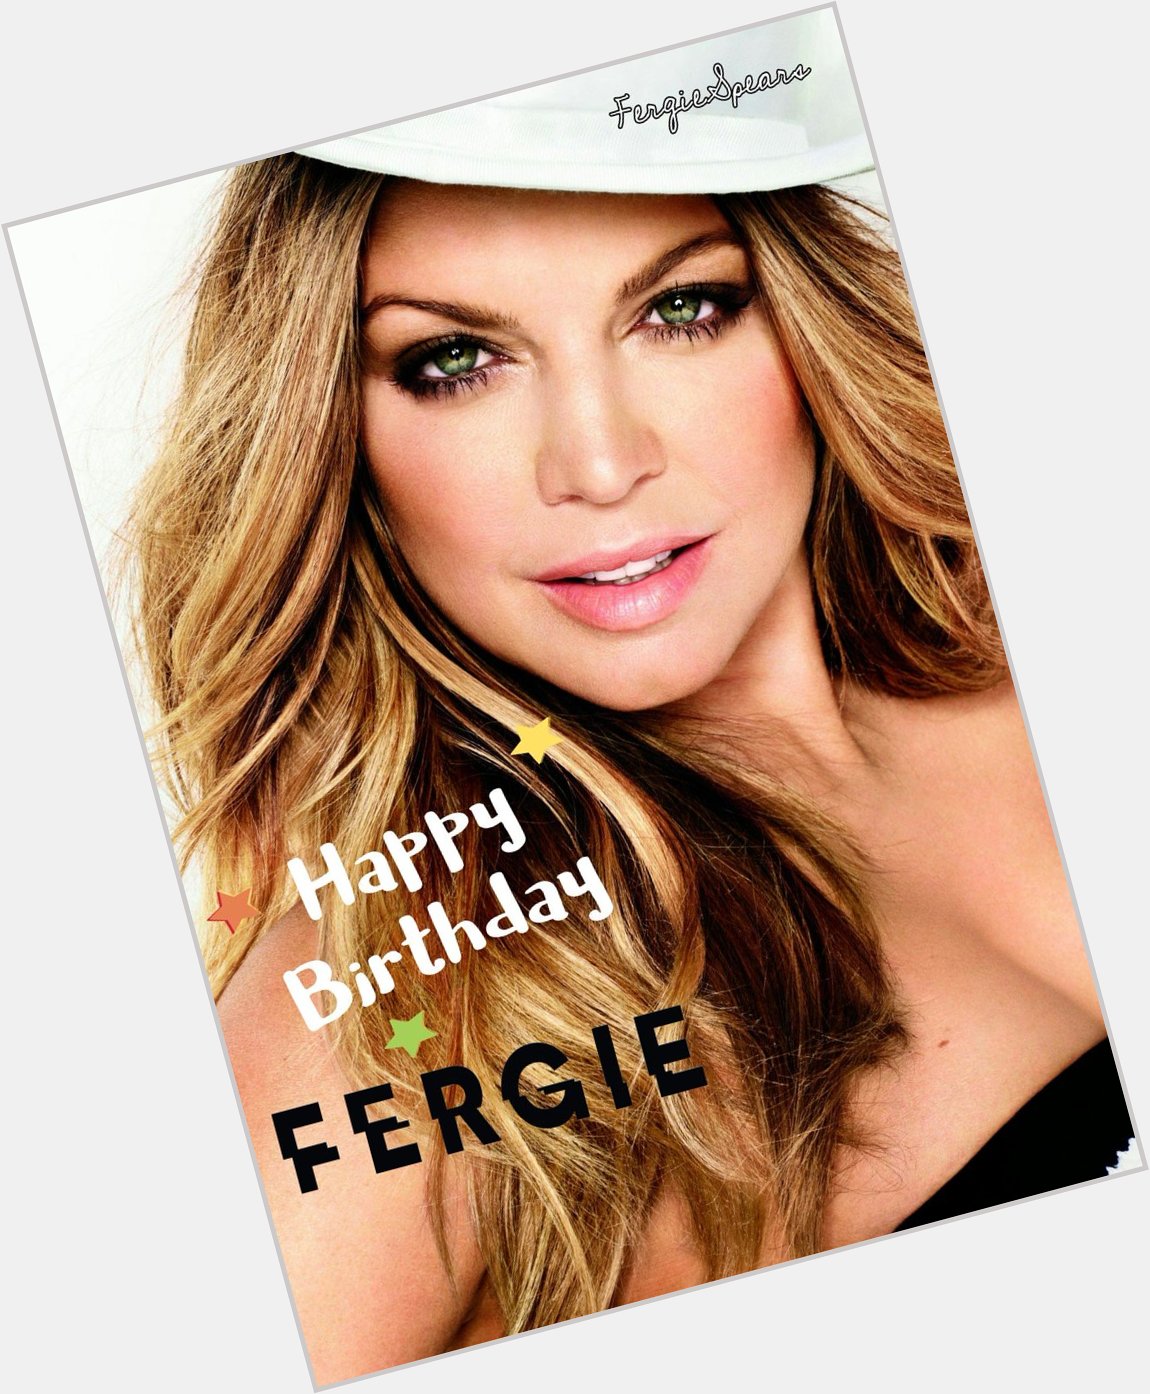 Happy BDay Fergie       